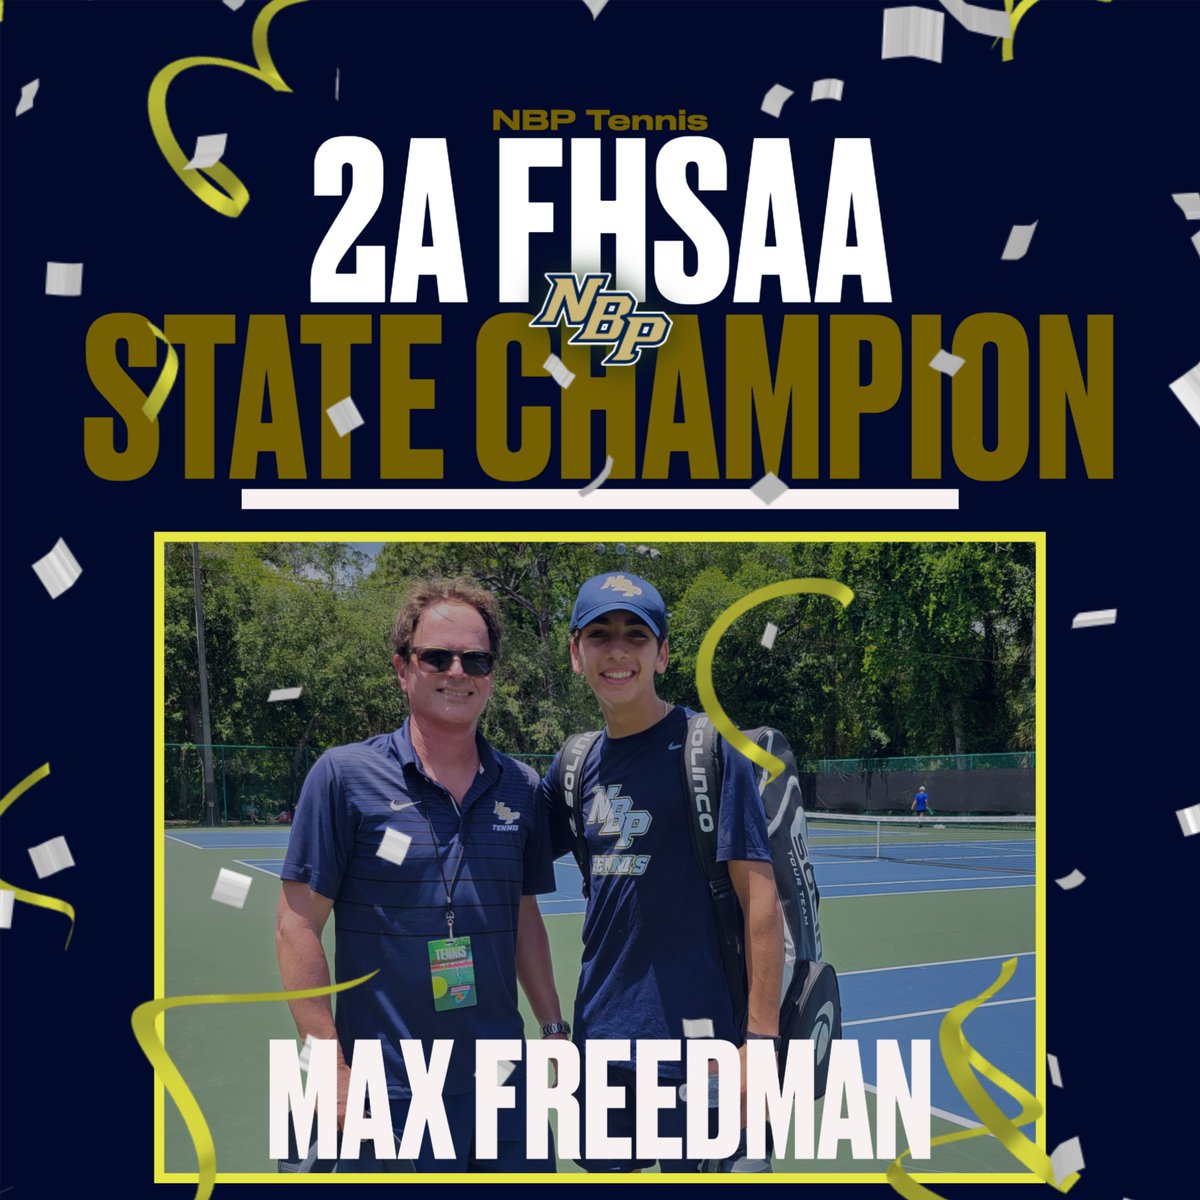 Congrats Max!!!!
2A FHSAA State Champion
#RepthePrep